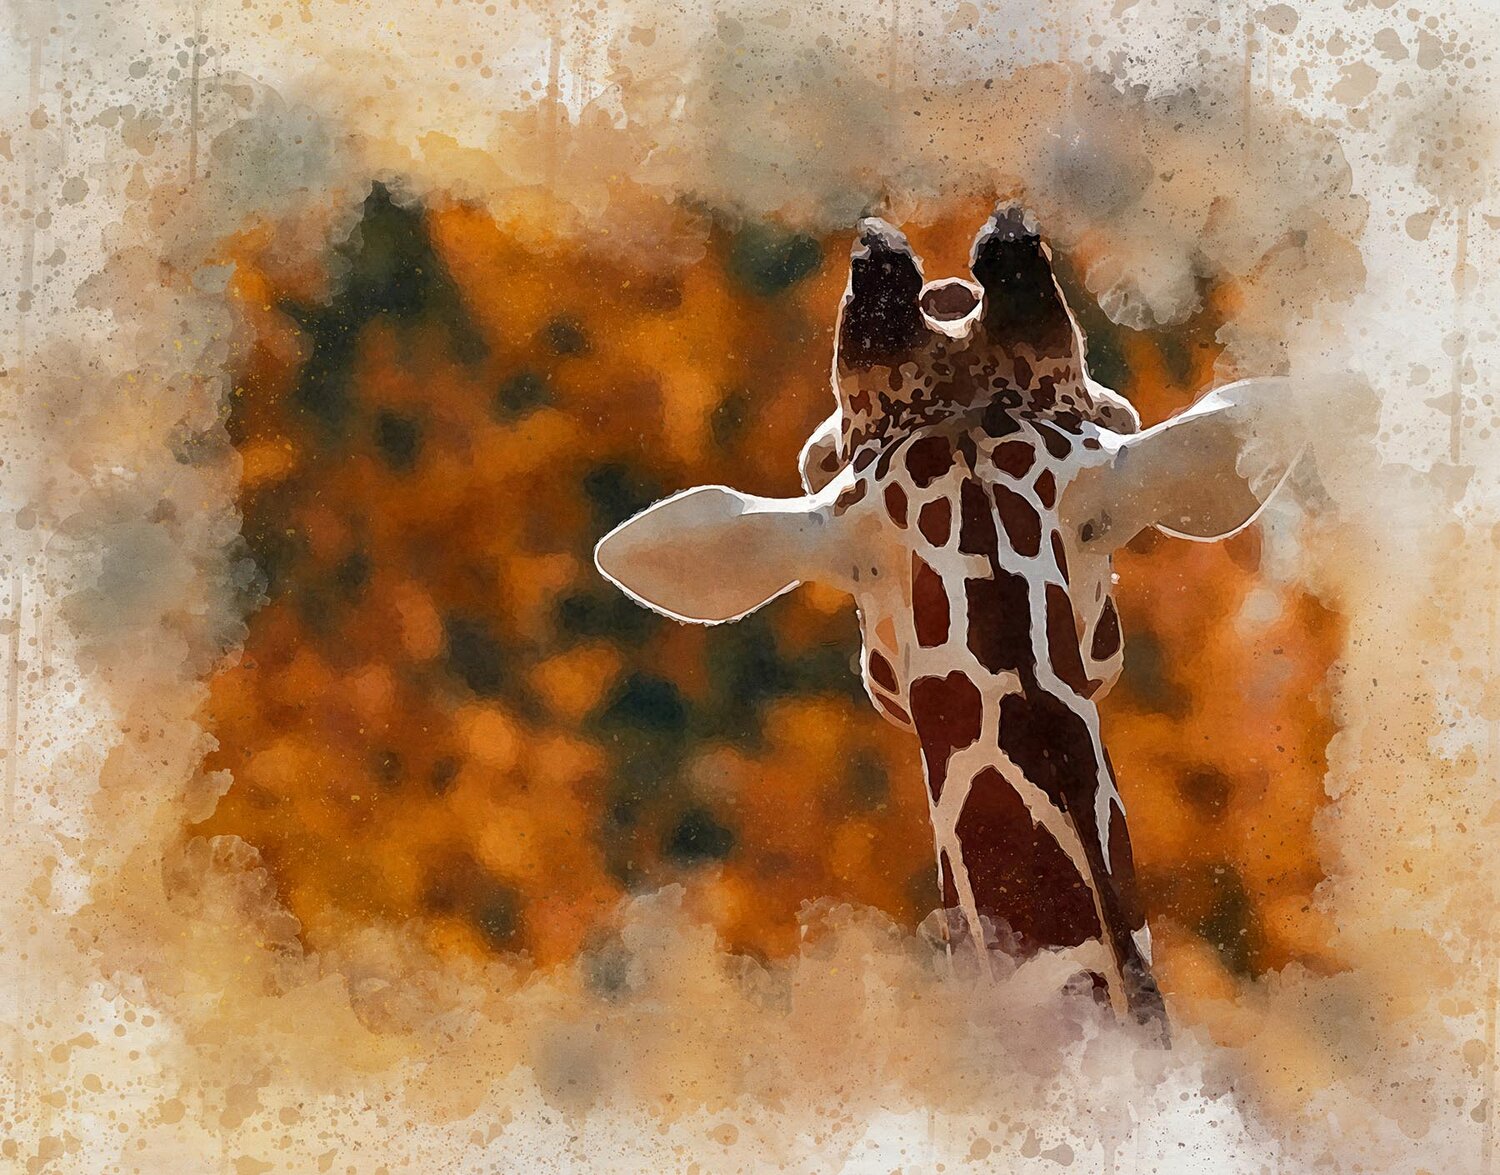 abstract giraffe painting